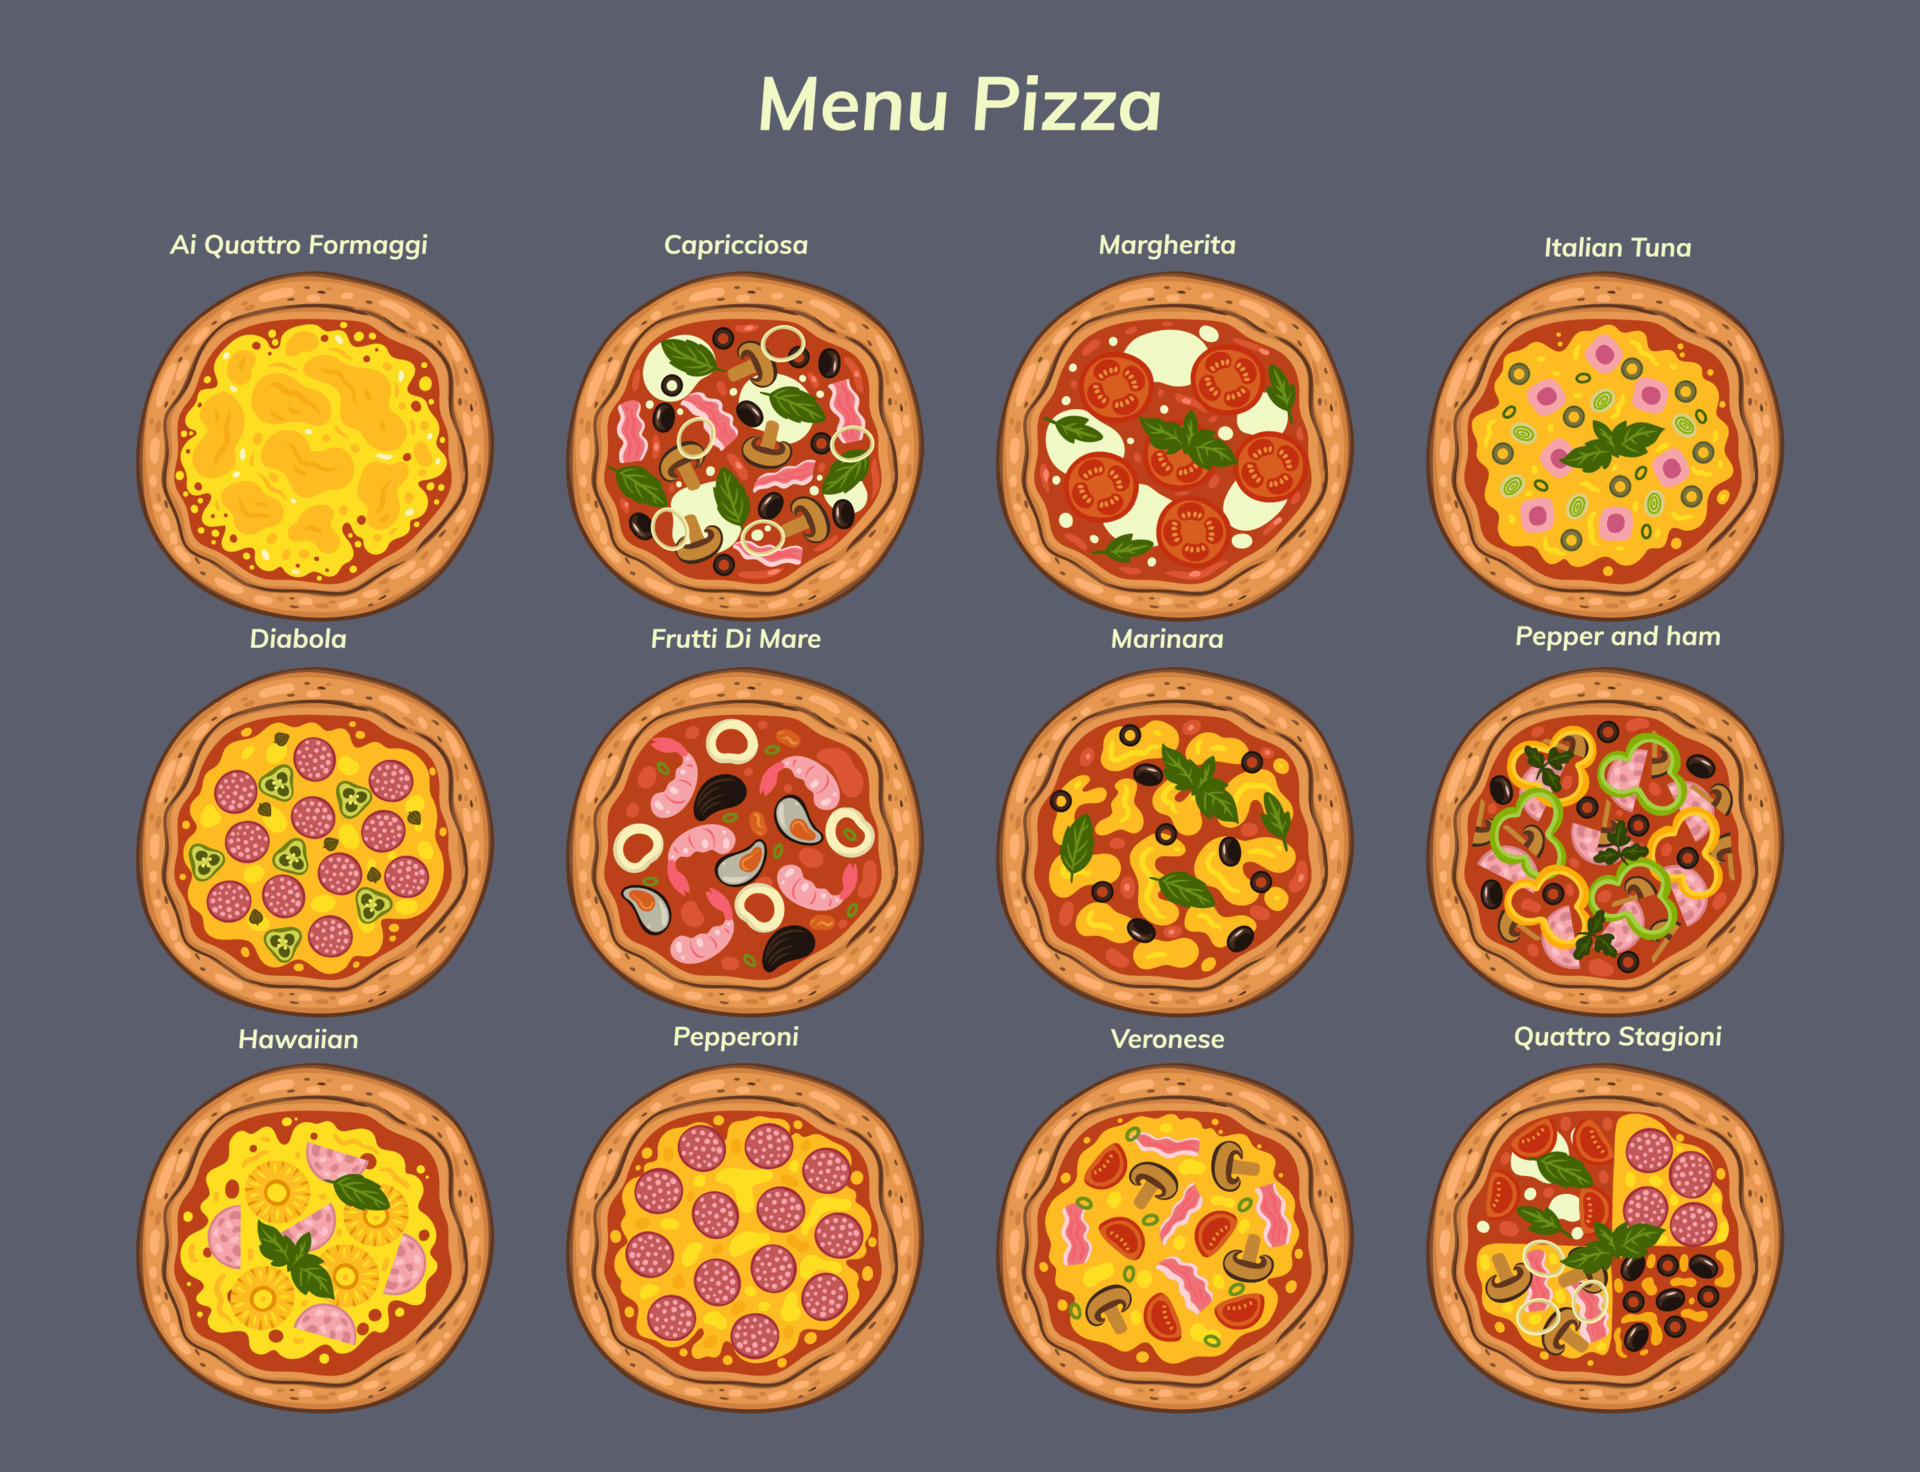 хорошая пицца отличная пицца половина от четырех пицц пепперони в игре фото 92